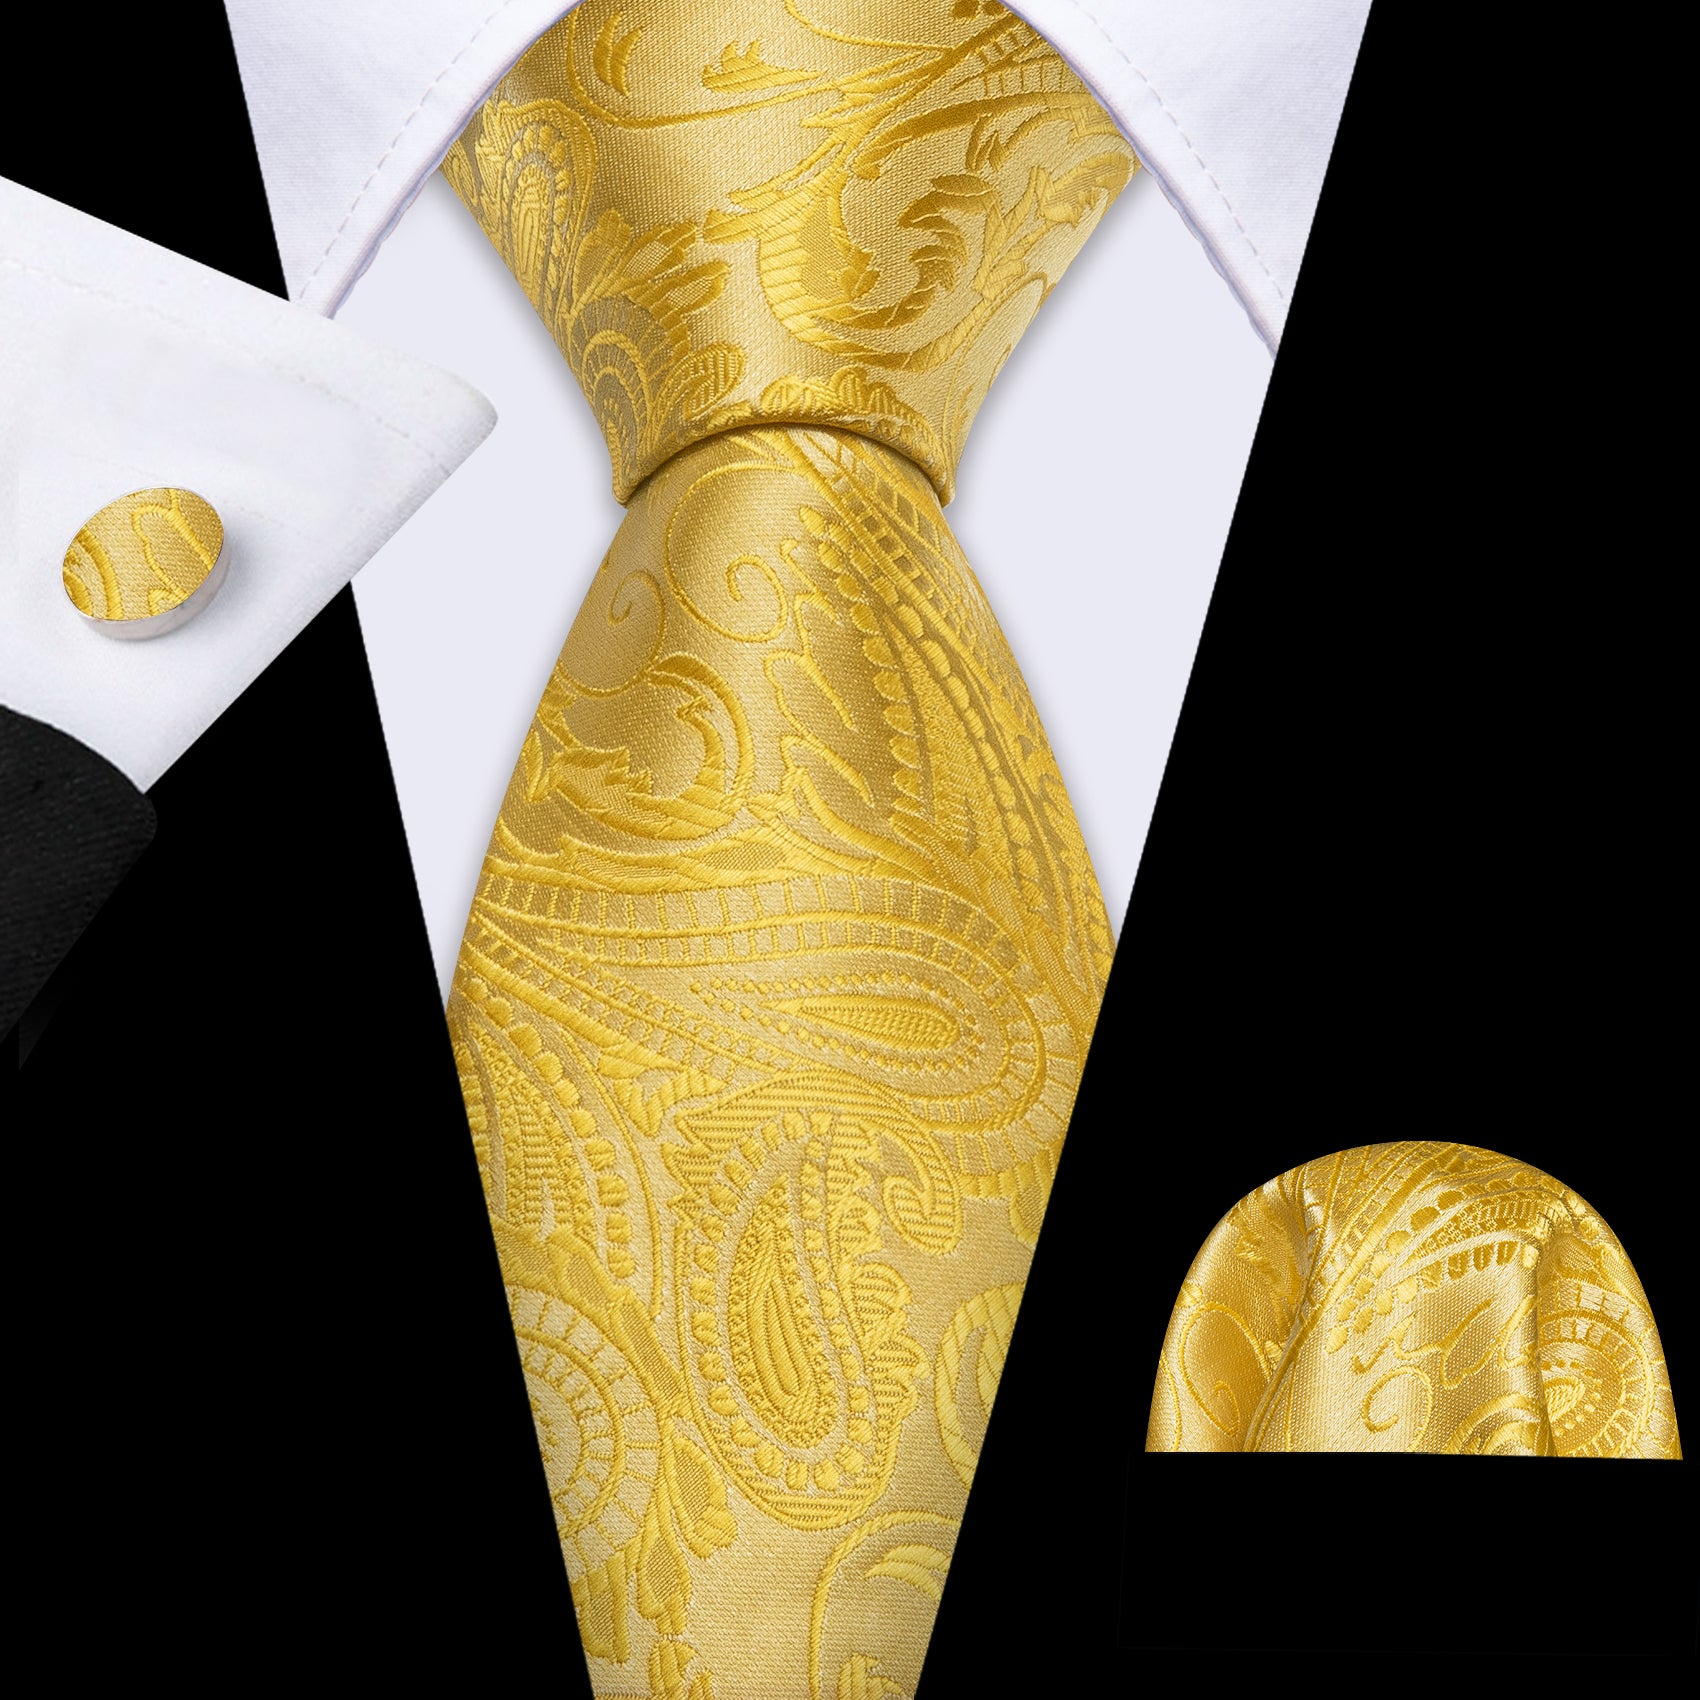 Barry.wang Gold Tie Paisley Silk Mens Tie Pocket Square Cufflinks Set